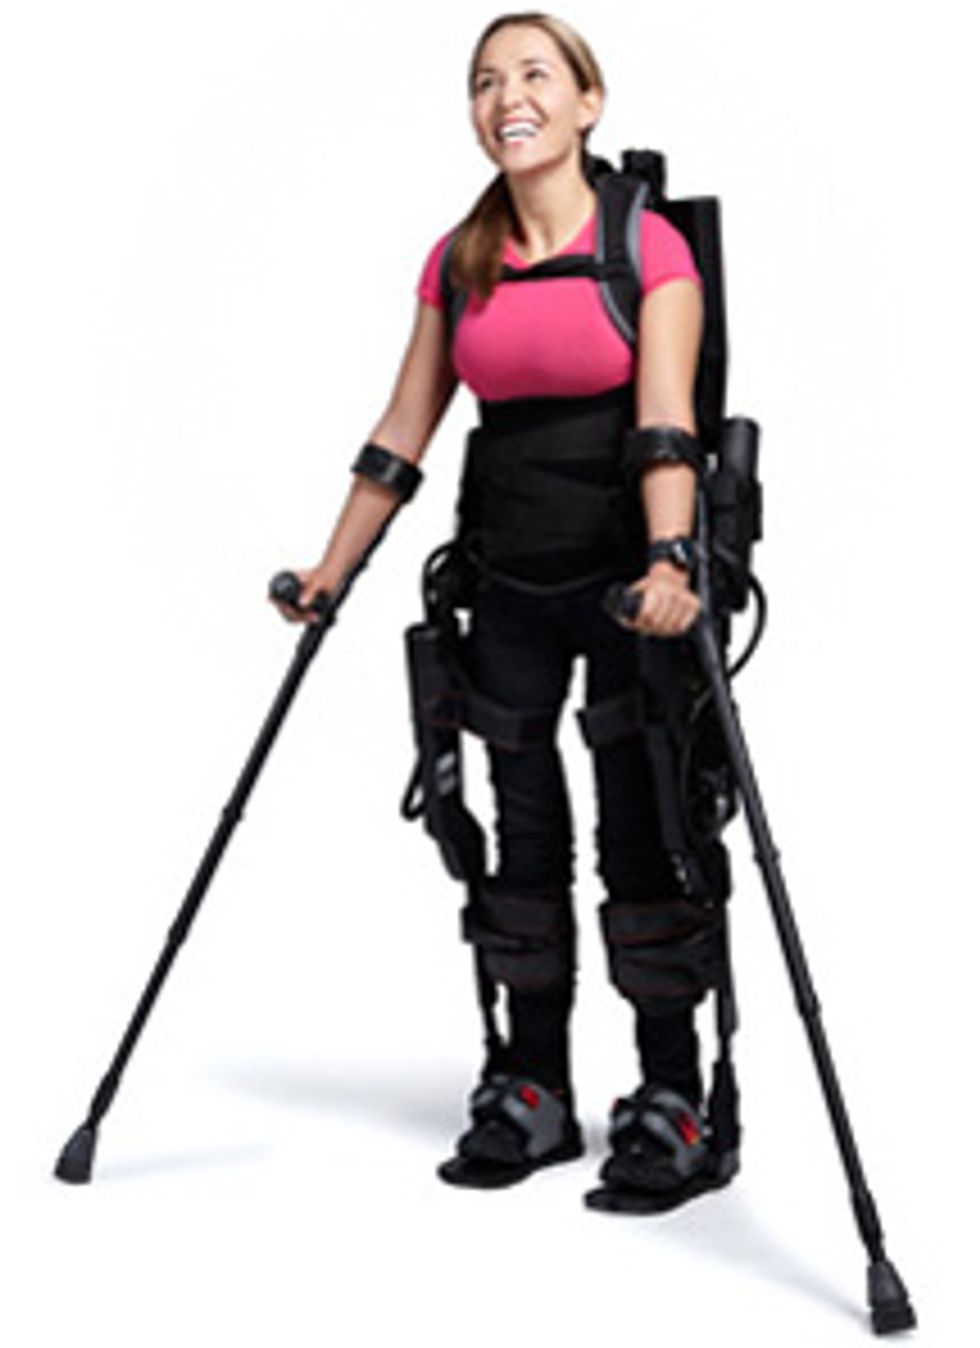 User Tamara Mena, who was paralyzed in 2005, gleefully puts her exoskeleton walking suit through its paces.